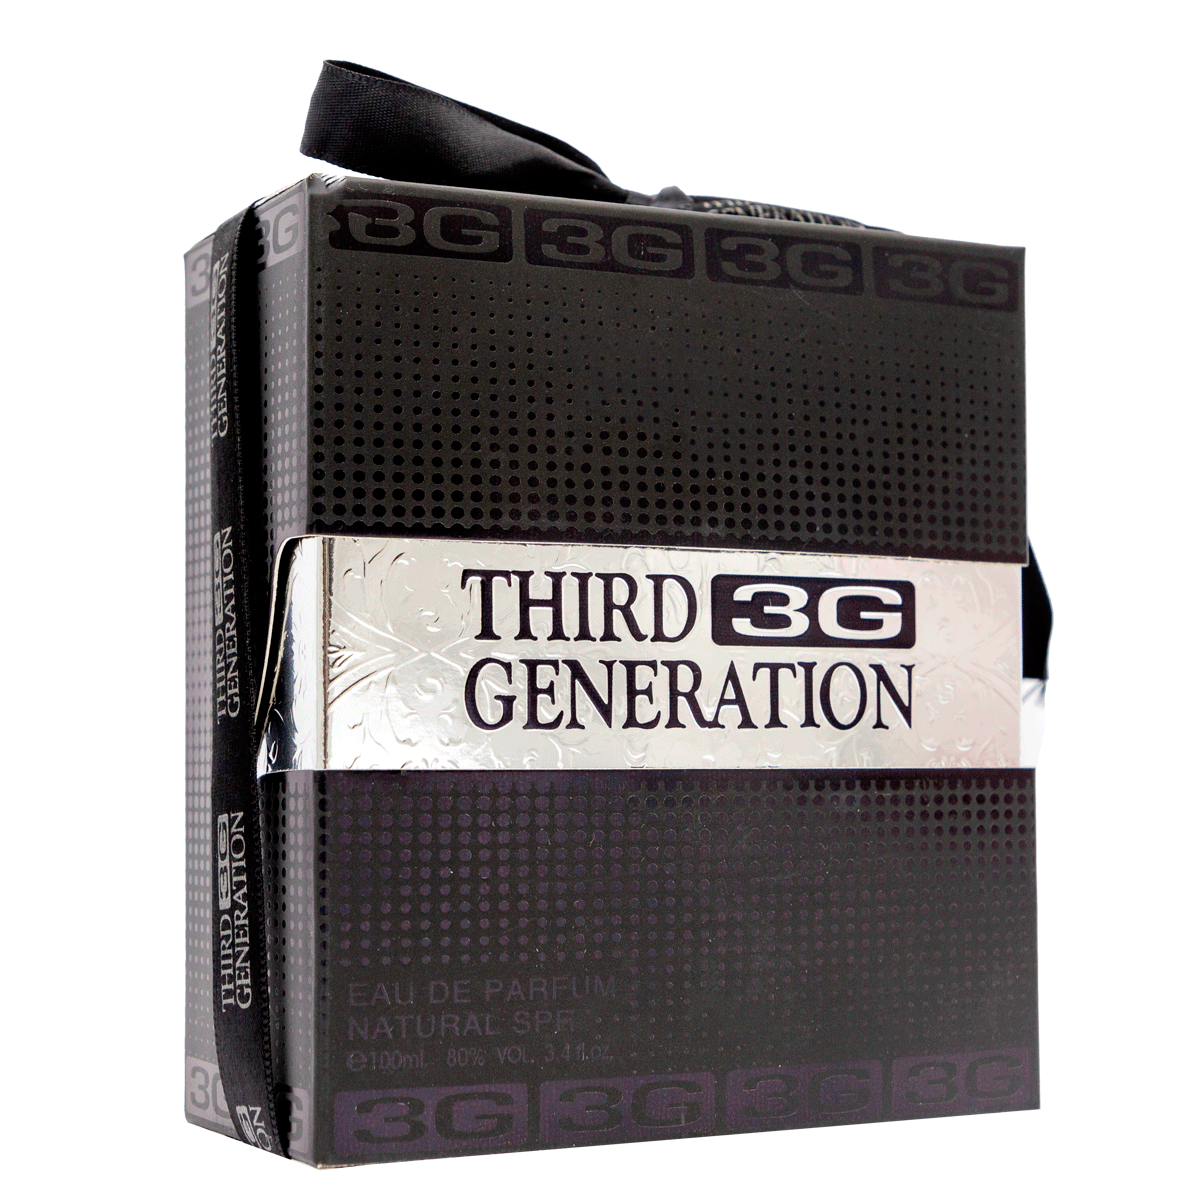 Օծանելիք տղամարդու Third 3G Generation 9-12 NO:3716